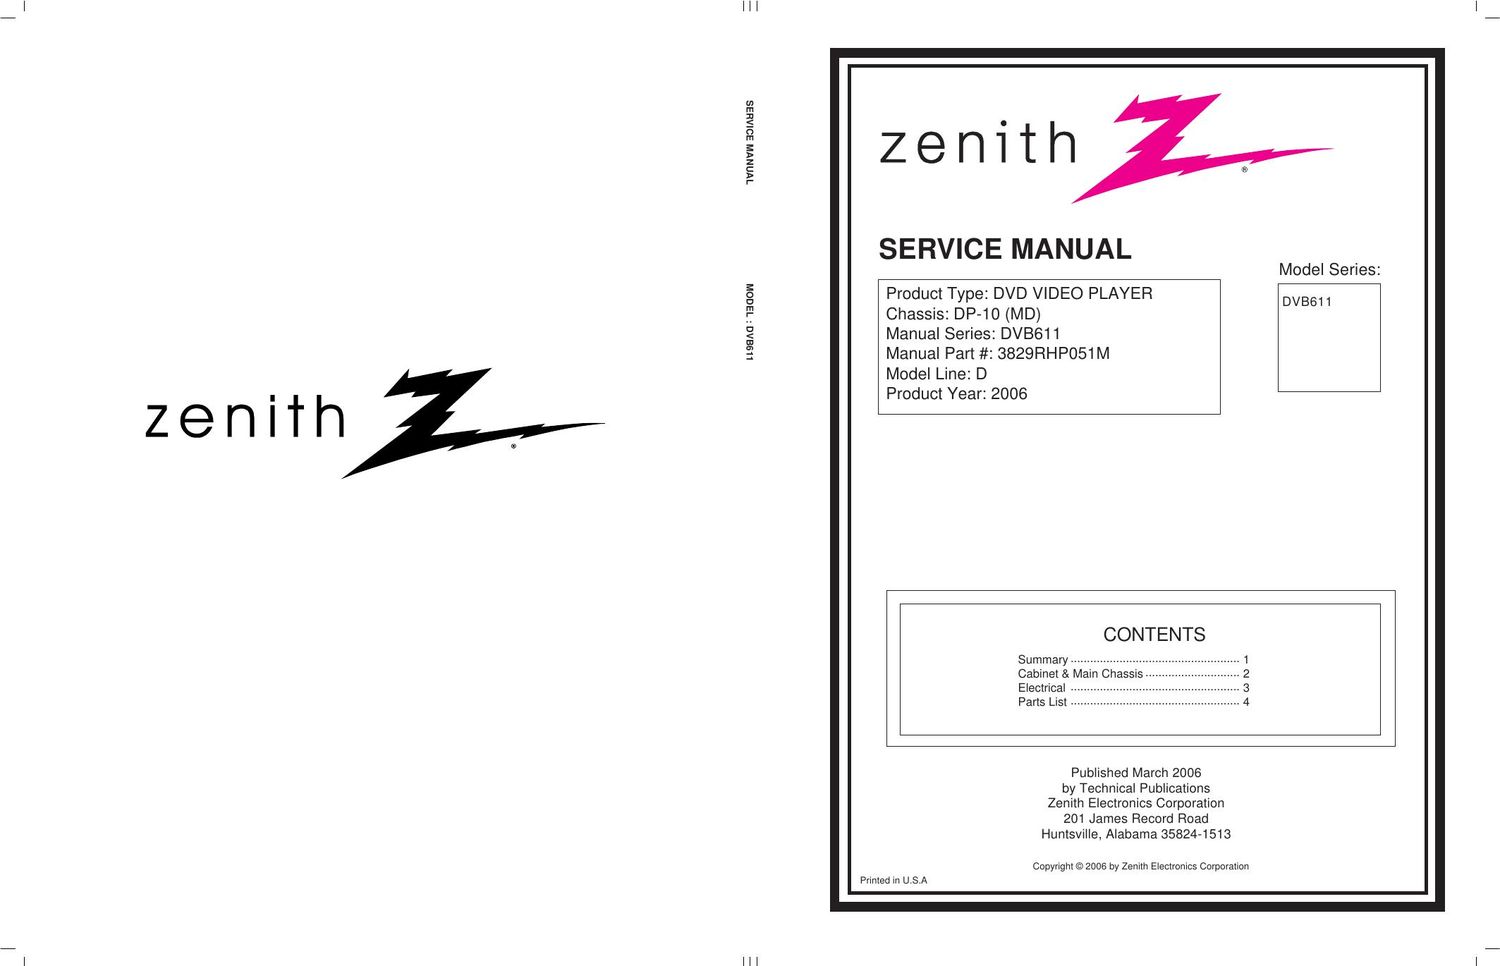 zenith dvb 611 service manual